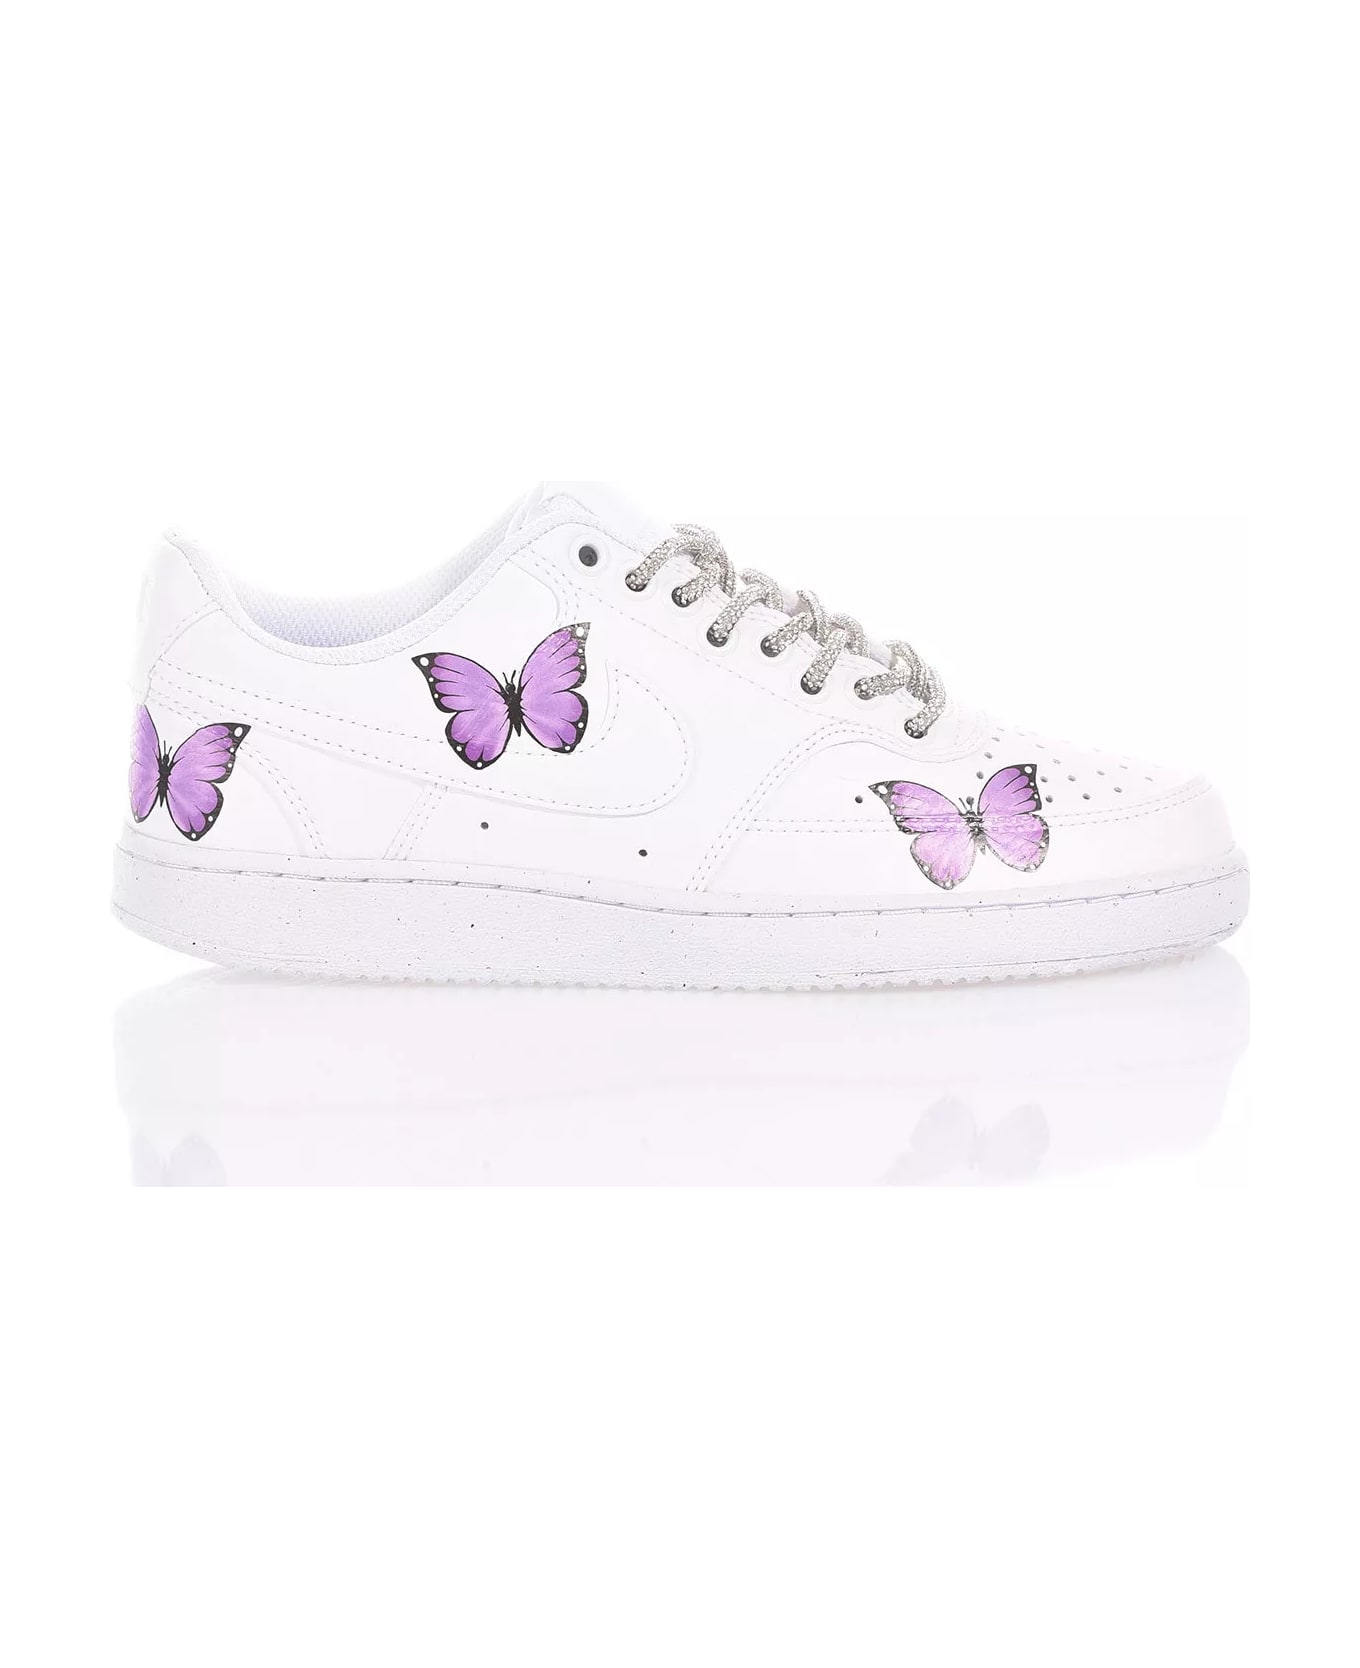 Mimanera Nike Butterfly Violet Custom スニーカー